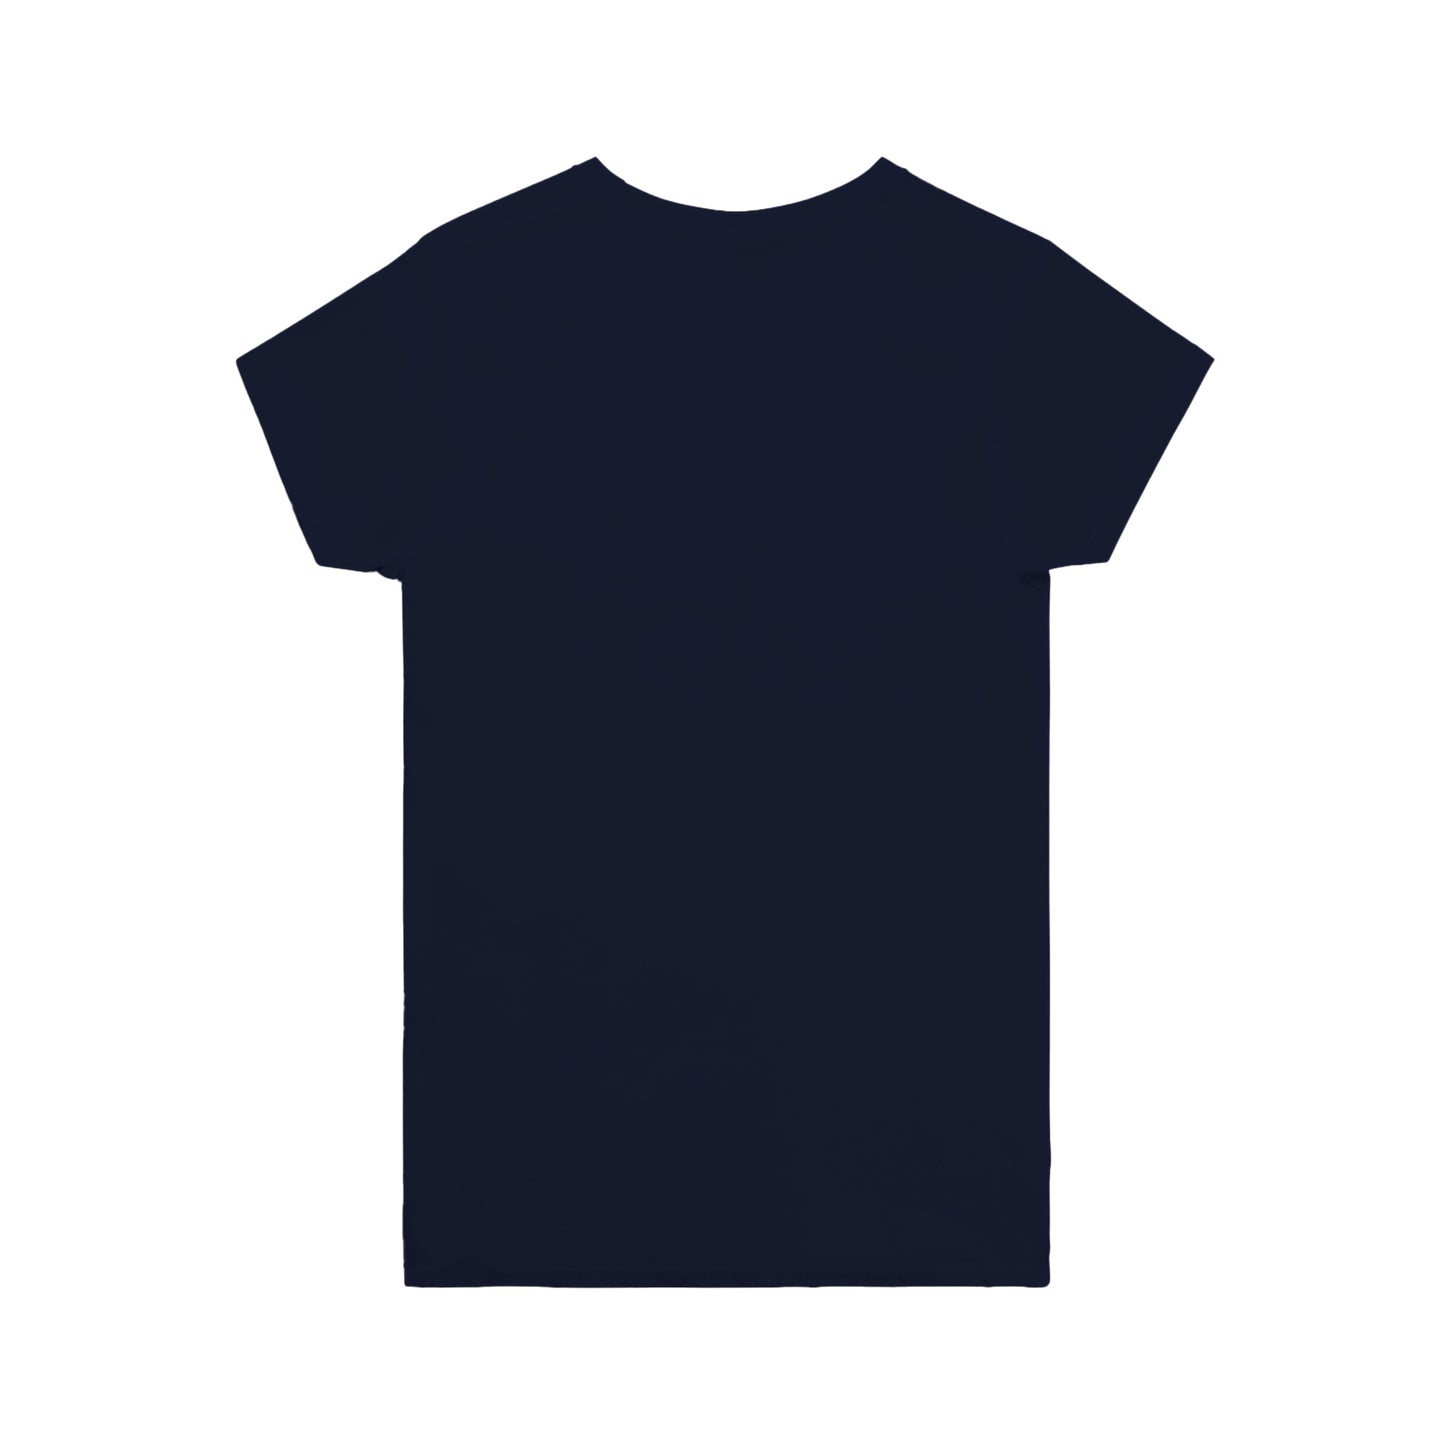 Amsterdam T-Shirt | Classic Womens Crewneck T-shirt | Pigeon Sketch | City Print